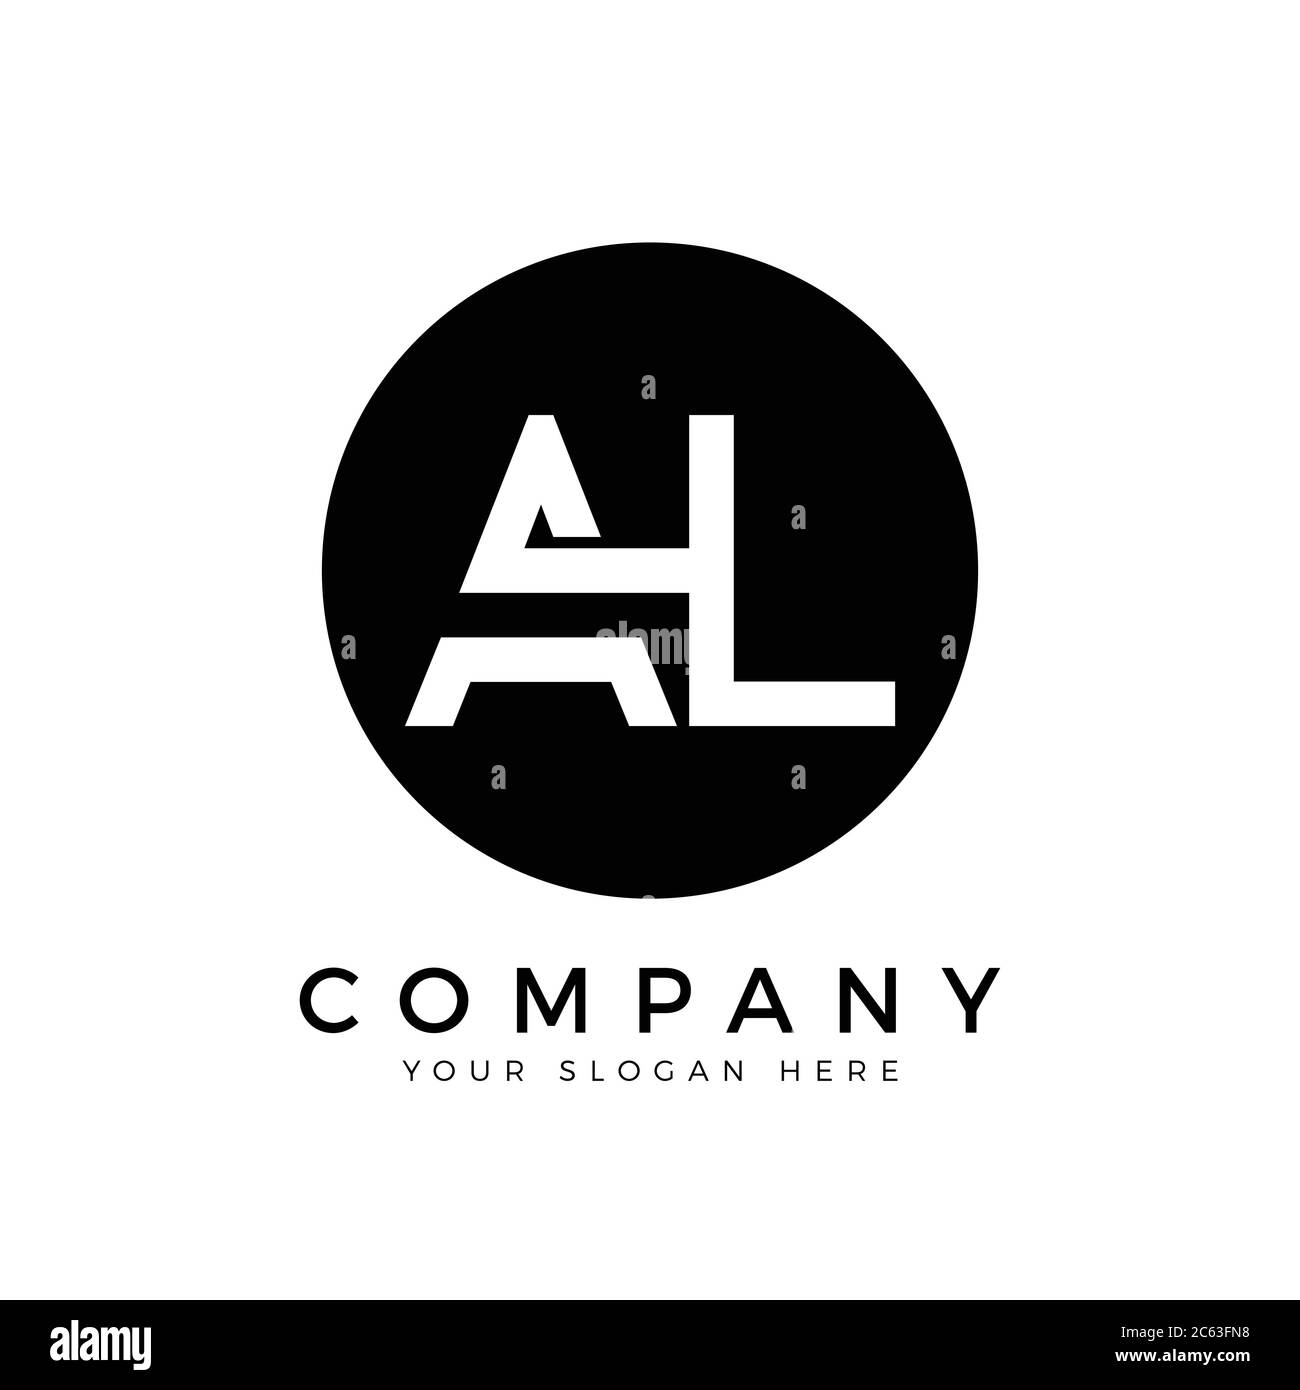 AL Logo Design Business Typography Vector Template. Creative Linked Letter AL Logo Template. AL Font Type Logo Stock Vector